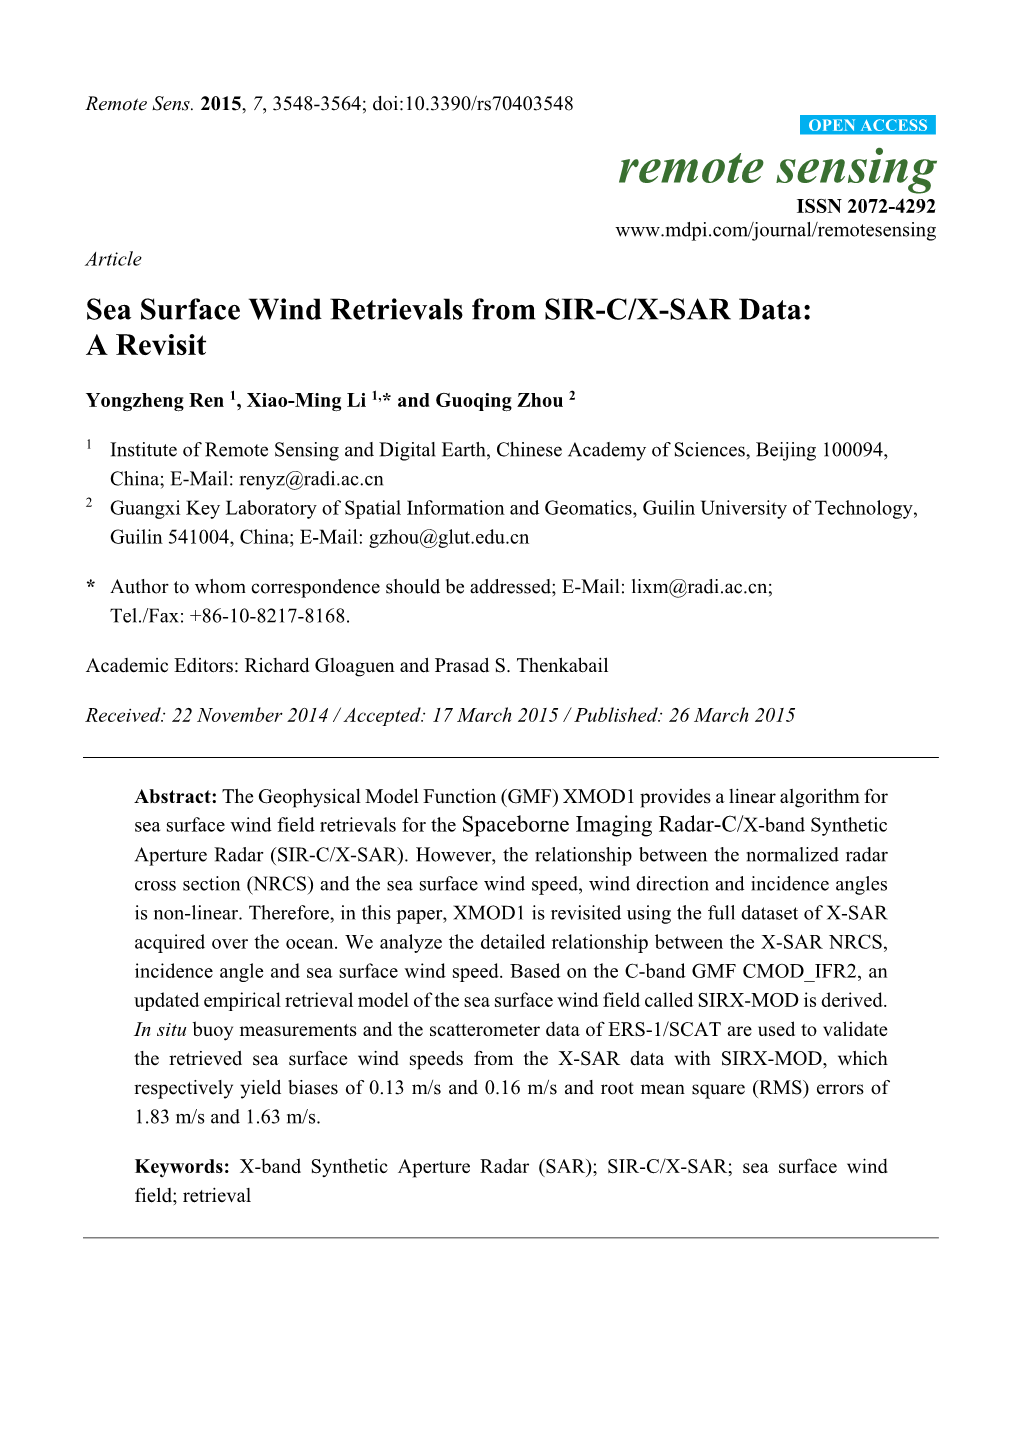 Sea Surface Wind Retrievals from SIR-C/X-SAR Data: a Revisit